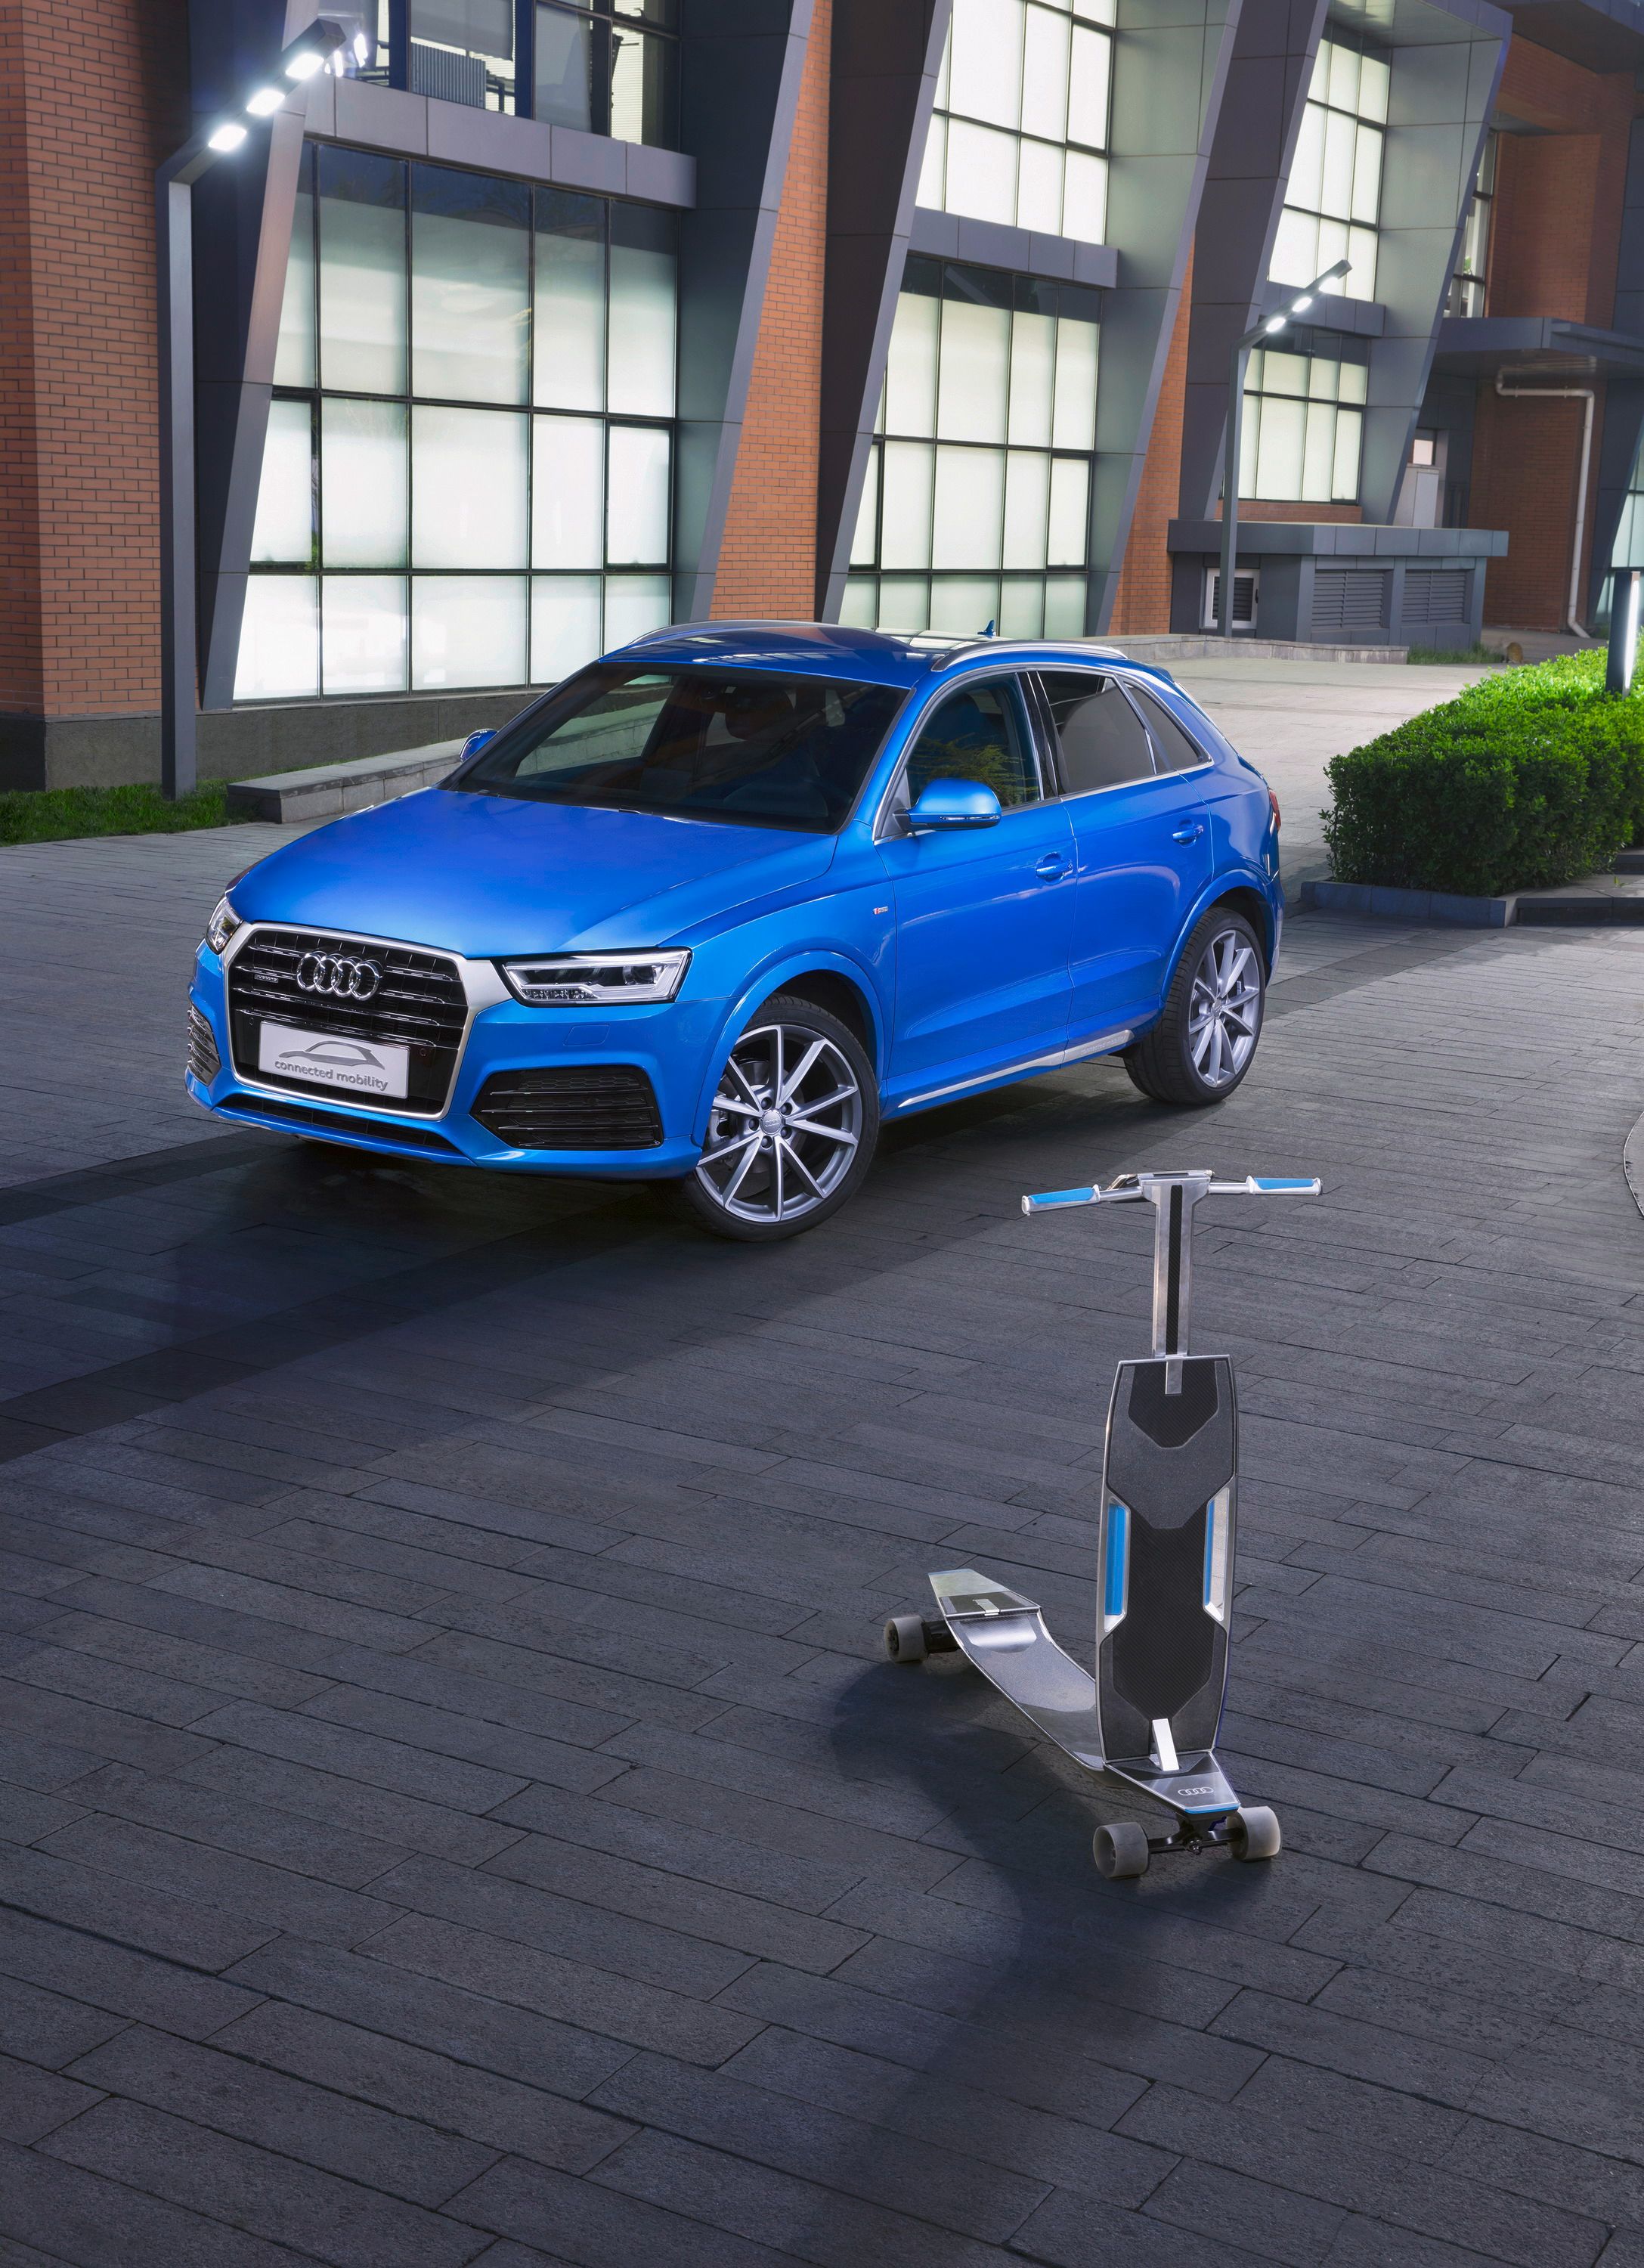 2016 Audi Q3 Connected Mobility Concept